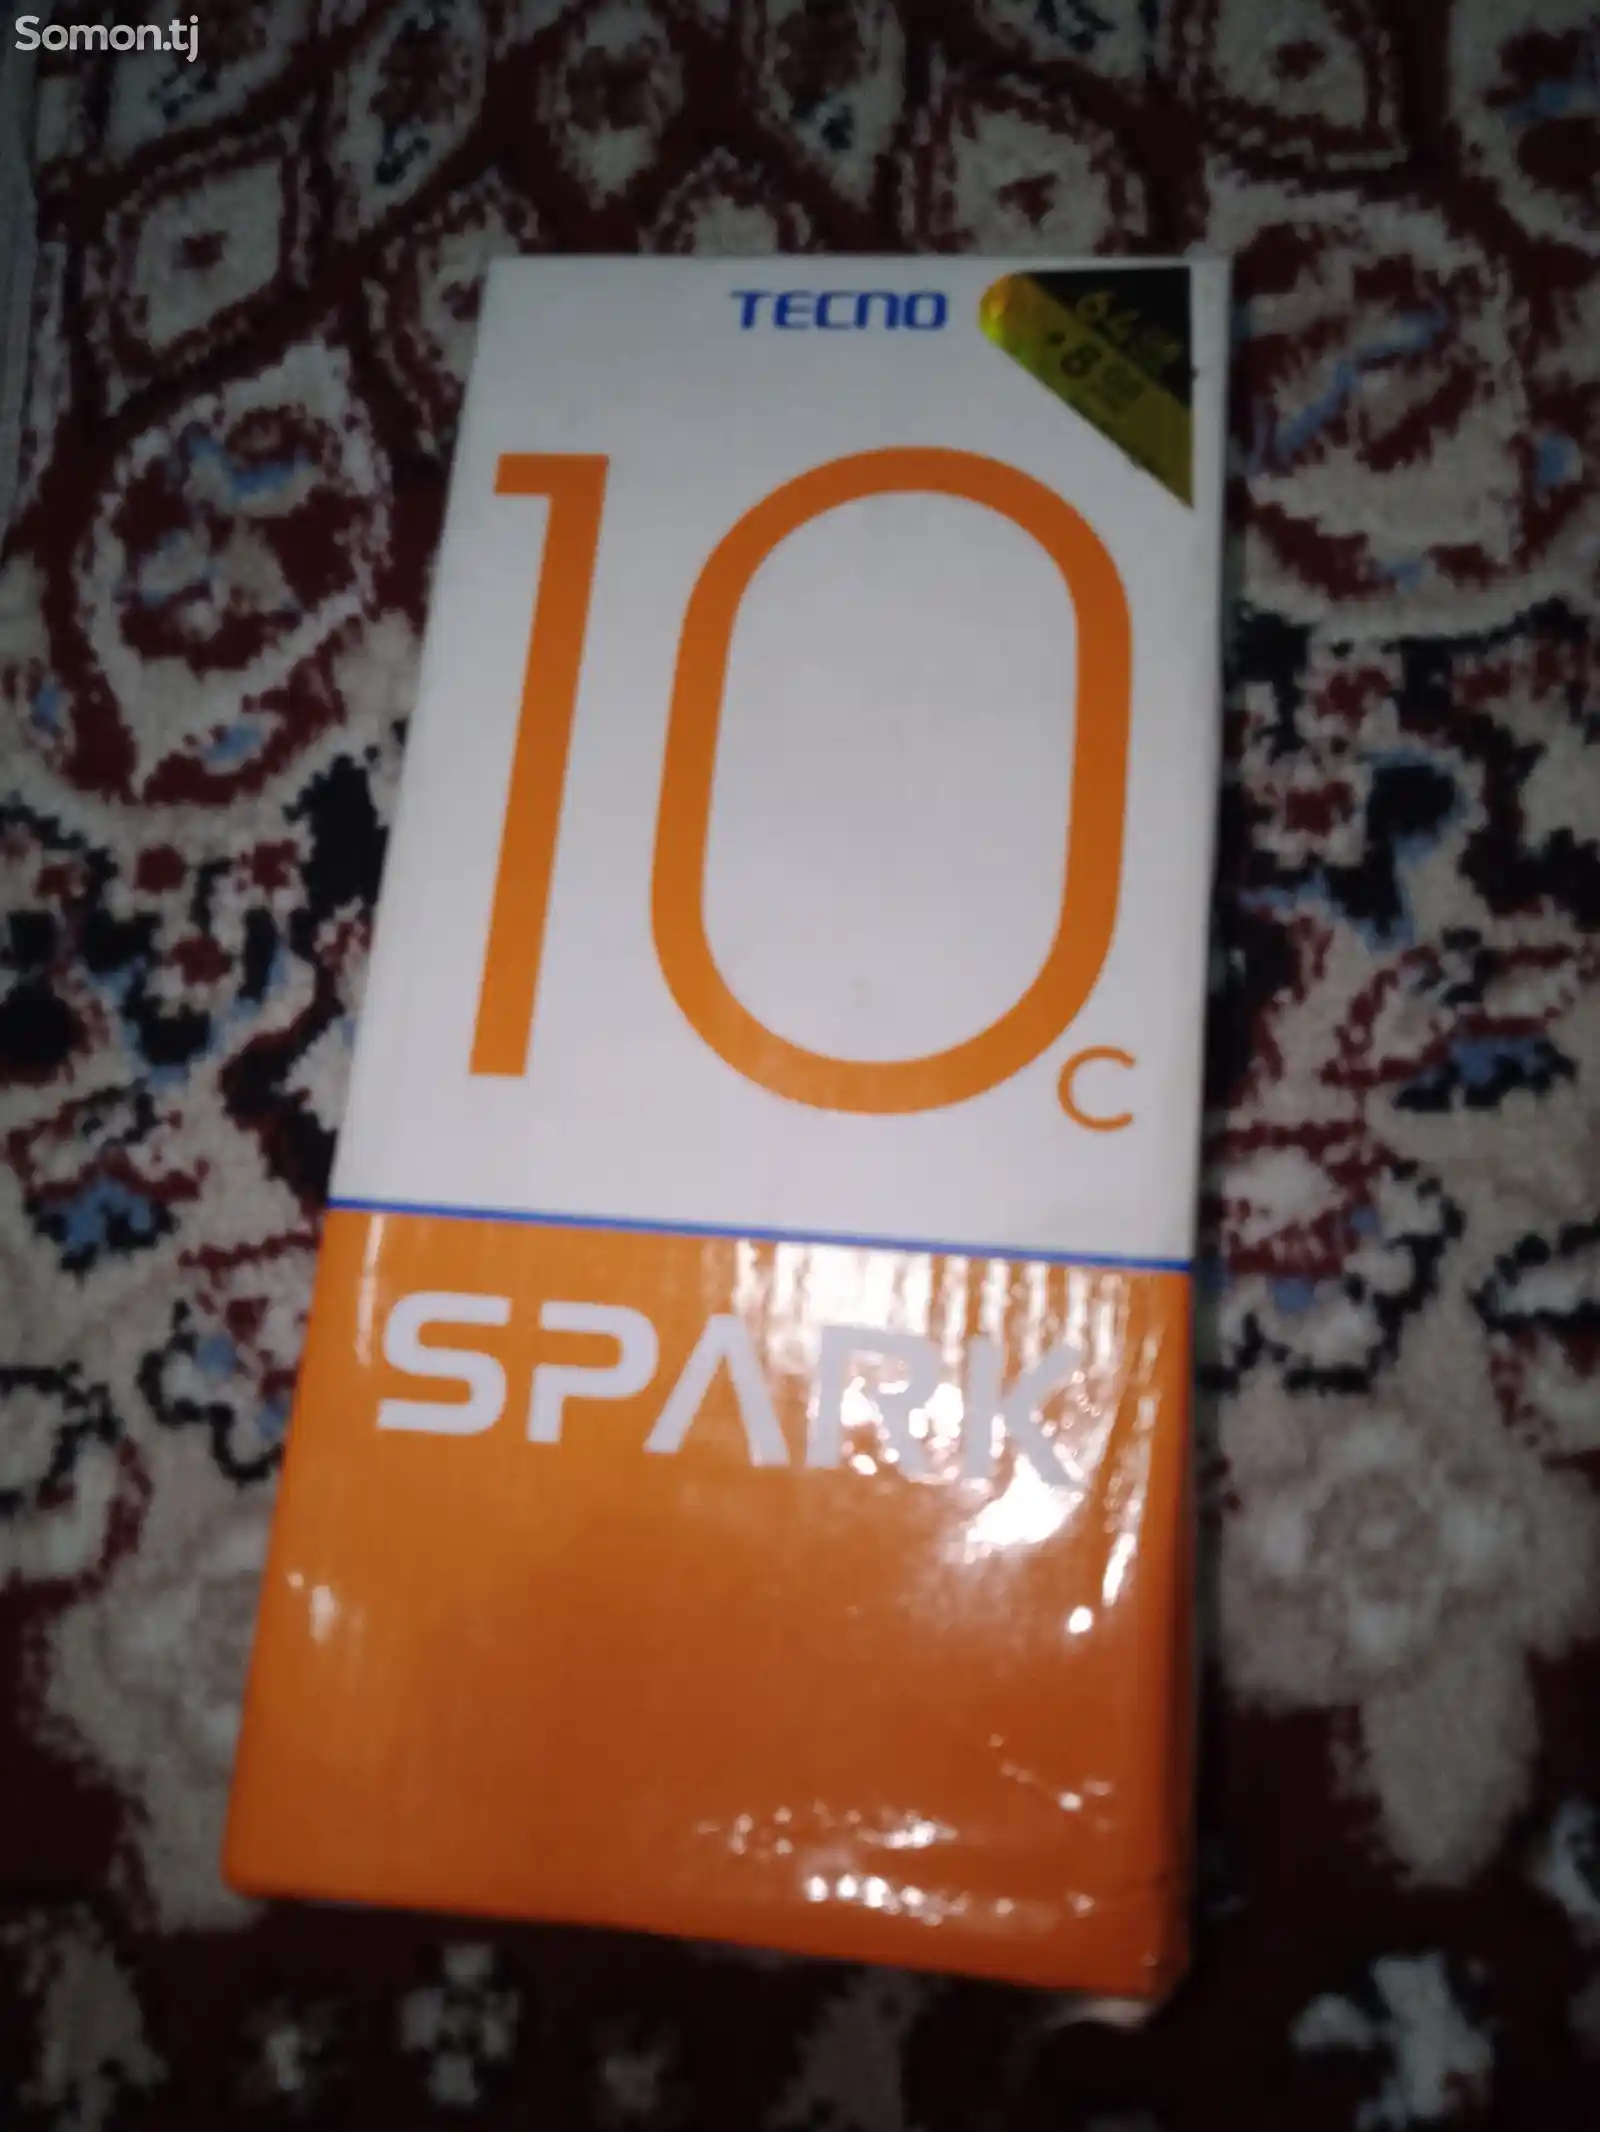 Tecno Spark 10c-2